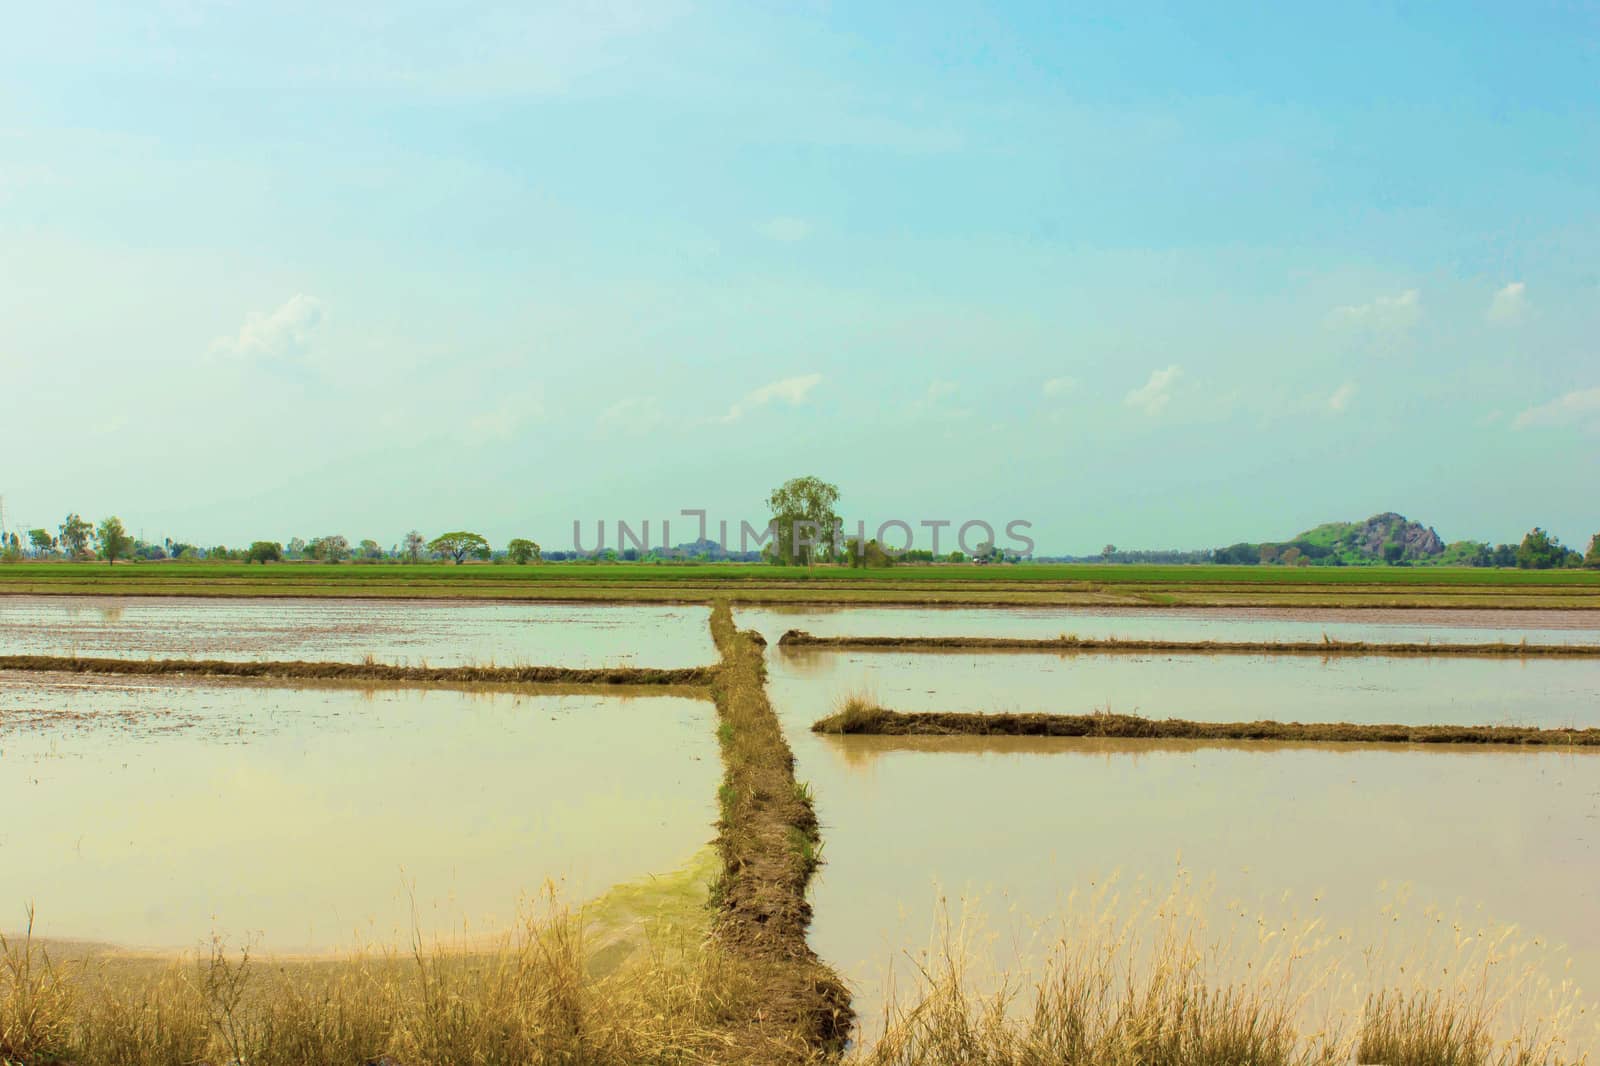 Preparation rice field by sutipp11